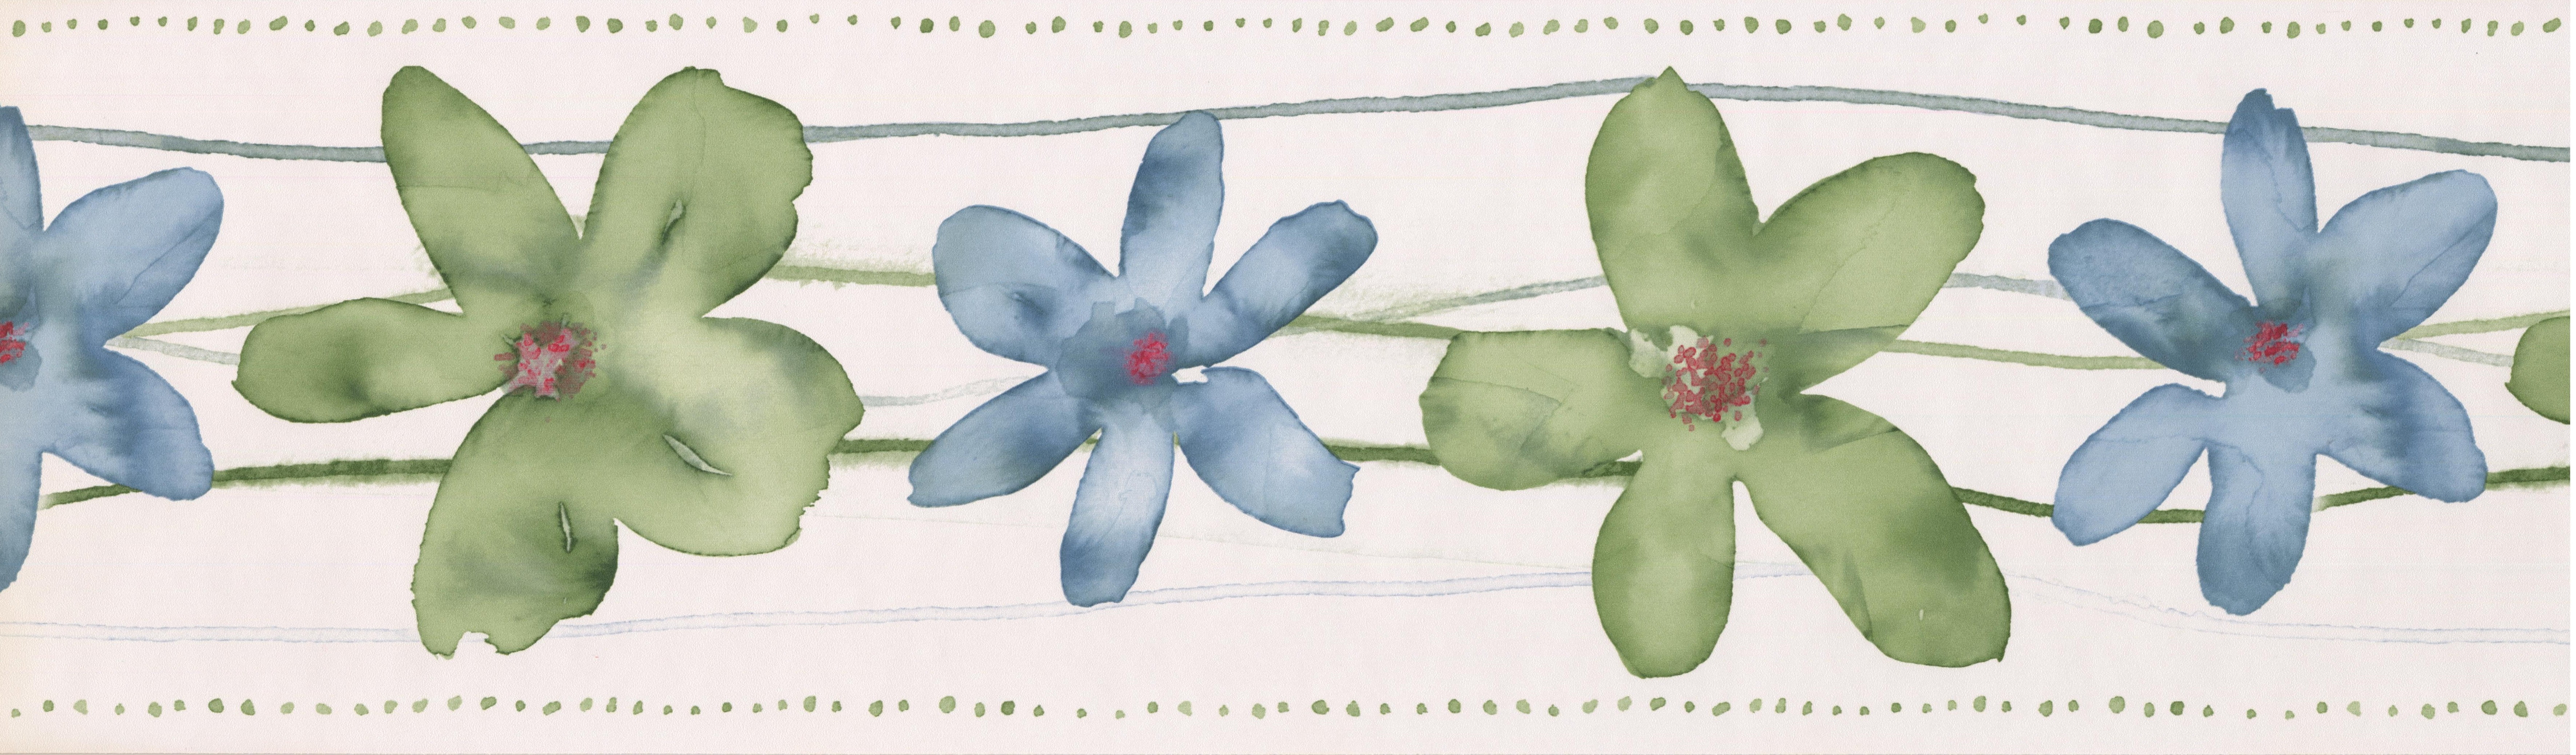 Green Cerulean Blue Flowers Bathroom Floral Wallpaper Border Paint by Design, Roll 15' x 7 ...